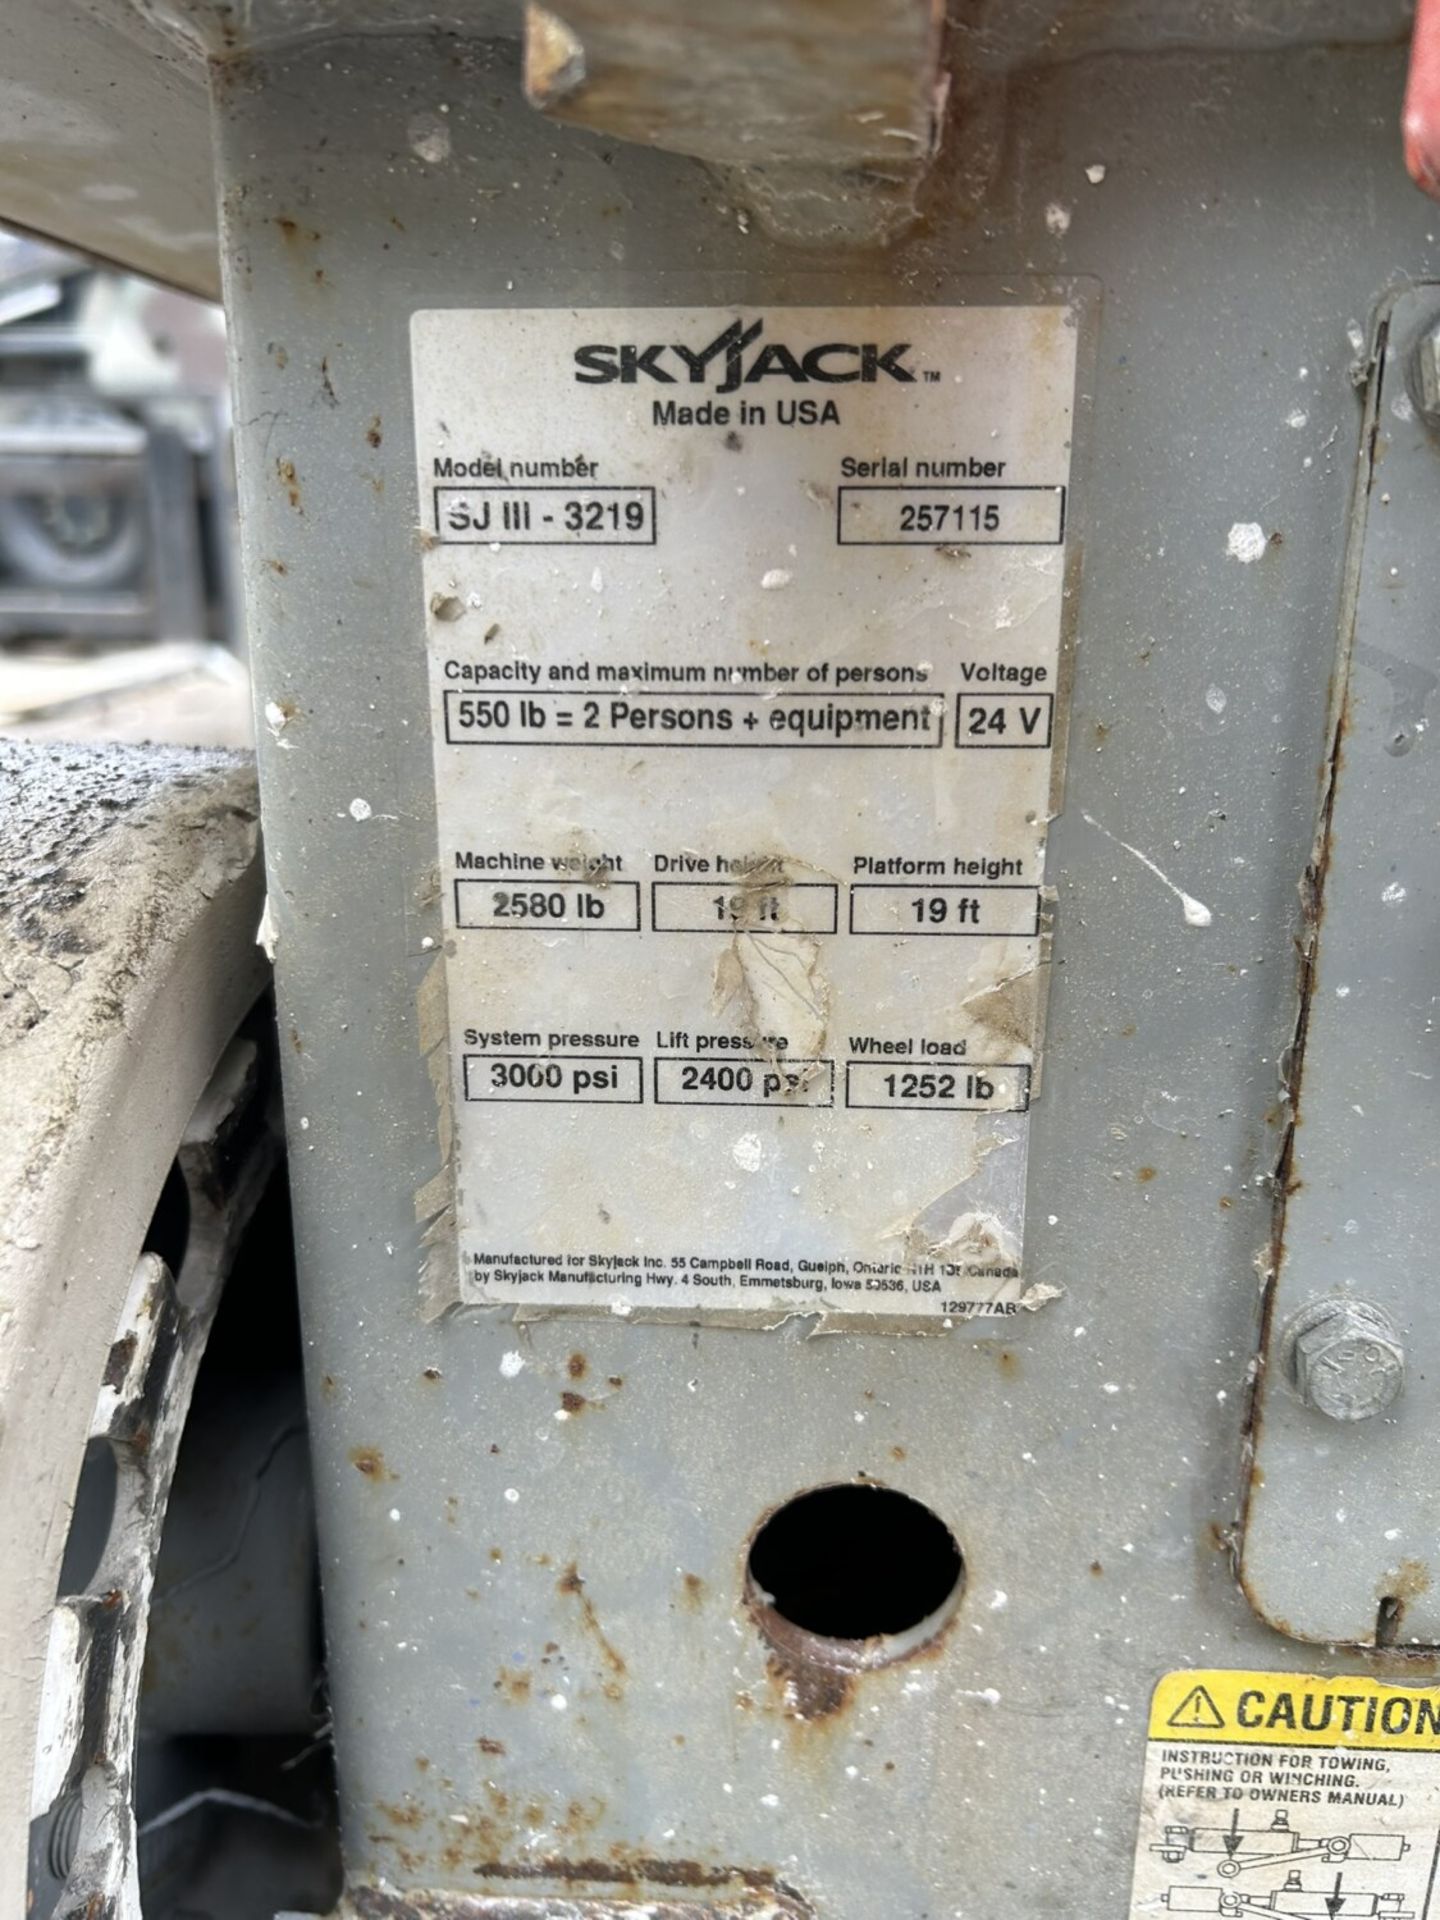 SKYJACK SJ III-3219 24V ELEC. SCISSOR LIFT, 19 FT PLATFORM HEIGHT, SOLID TIRE, S/N 257115 - Image 7 of 8